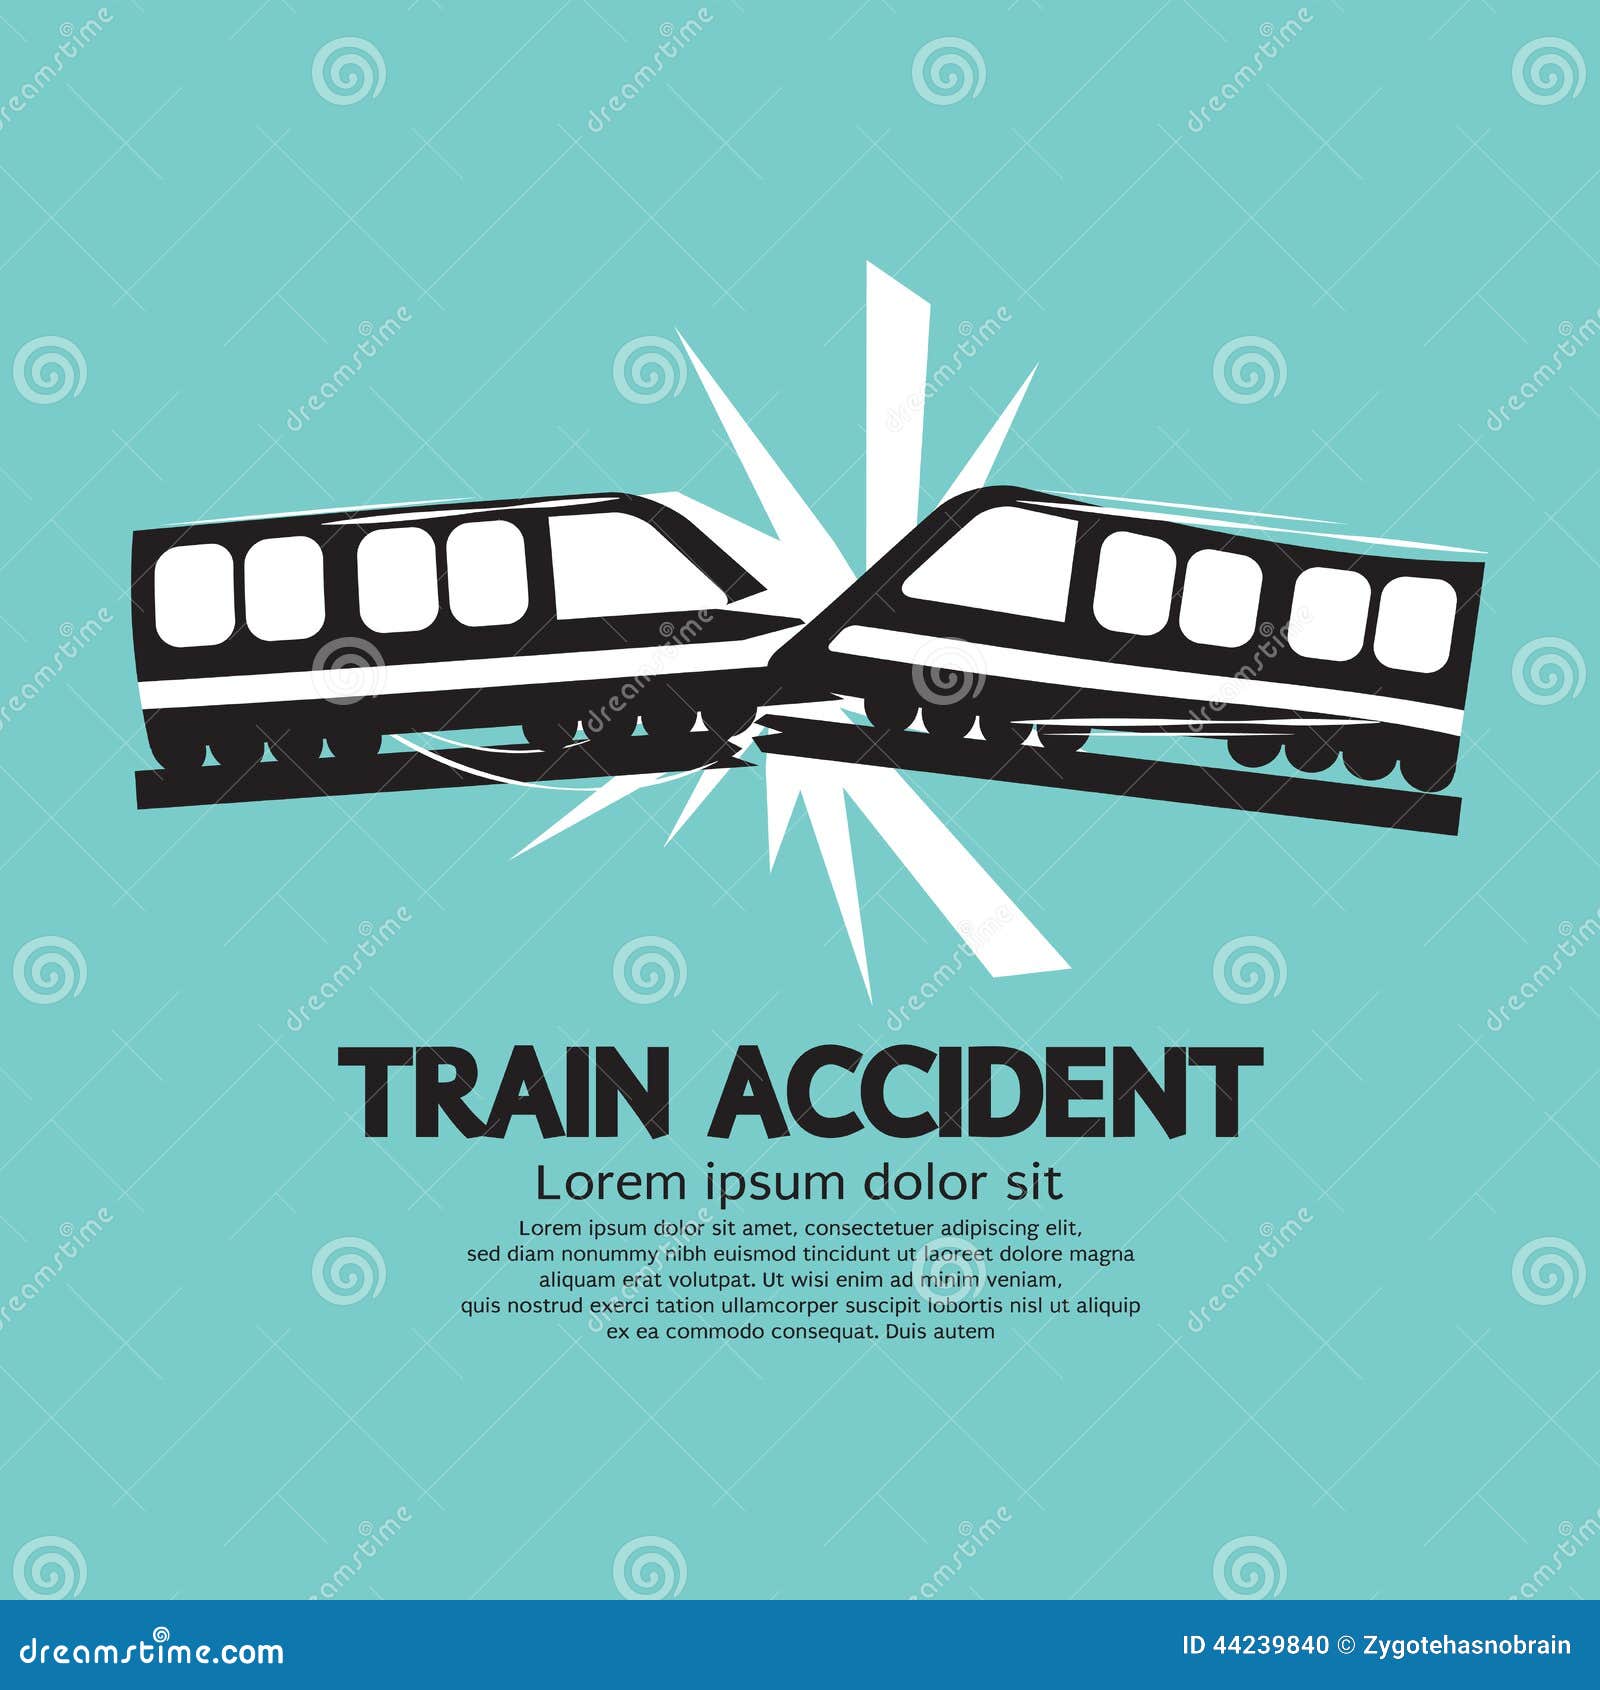 Train Accident Paintings for Sale - Pixels